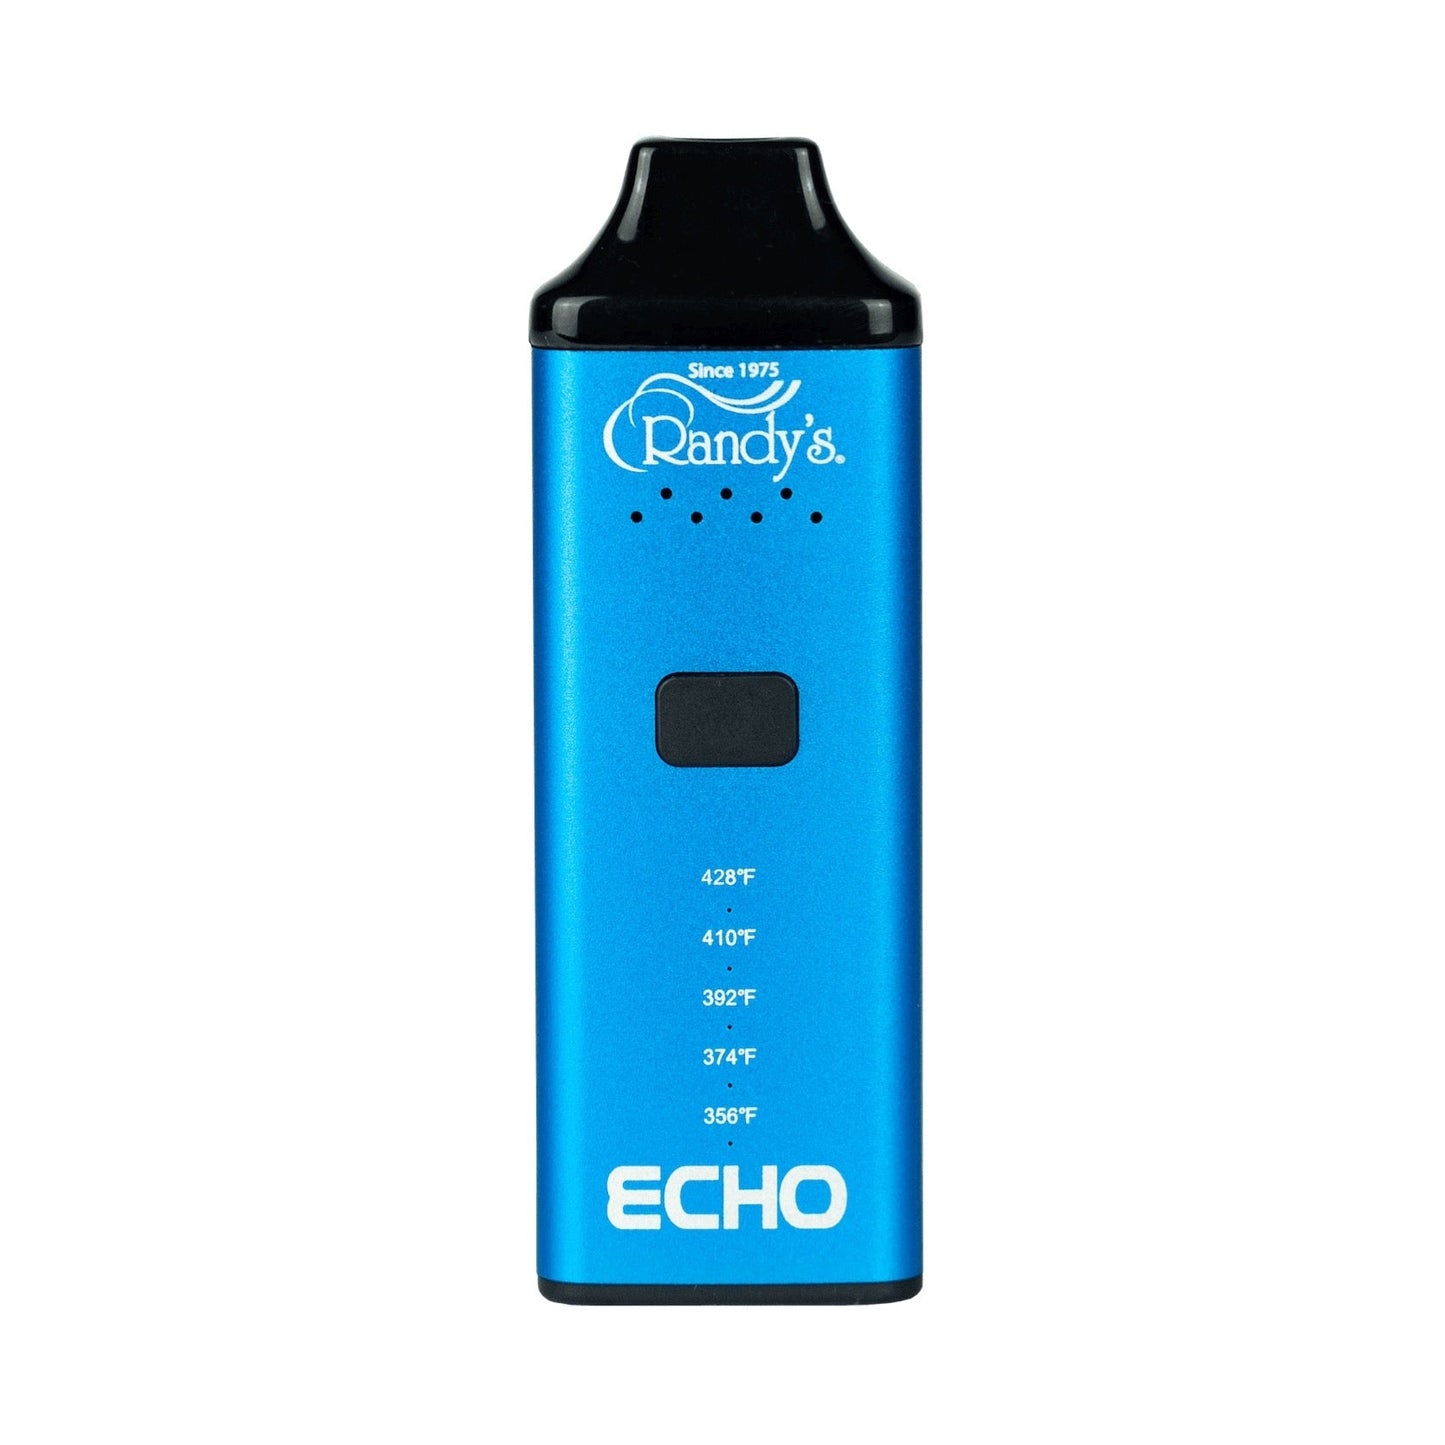 Randyâ€™s Echo Dry Herb Vaporizer